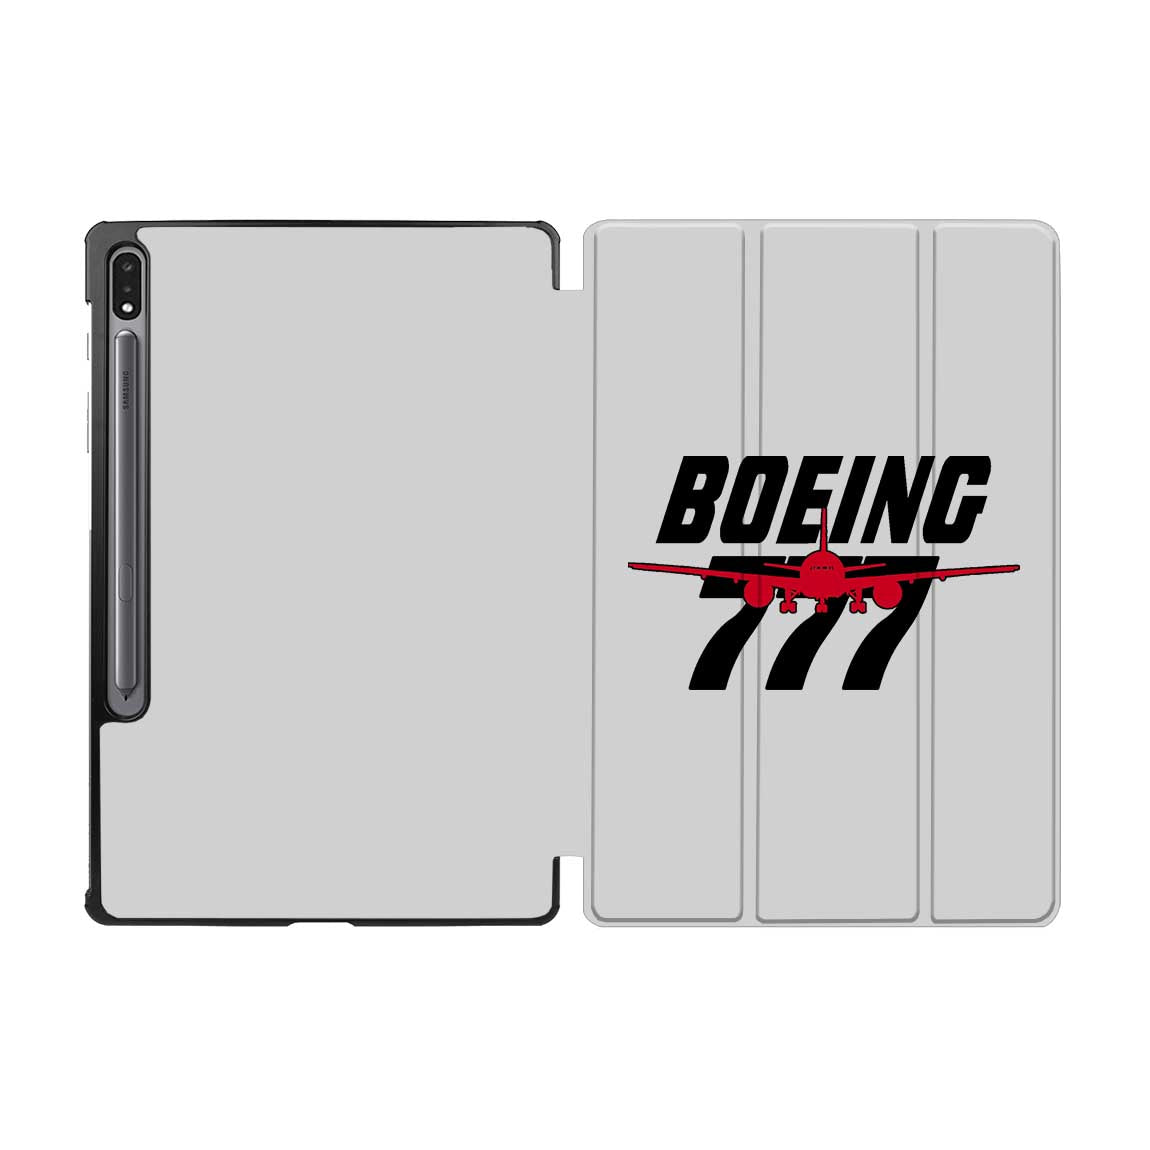 Amazing Boeing 777 Designed Samsung Tablet Cases